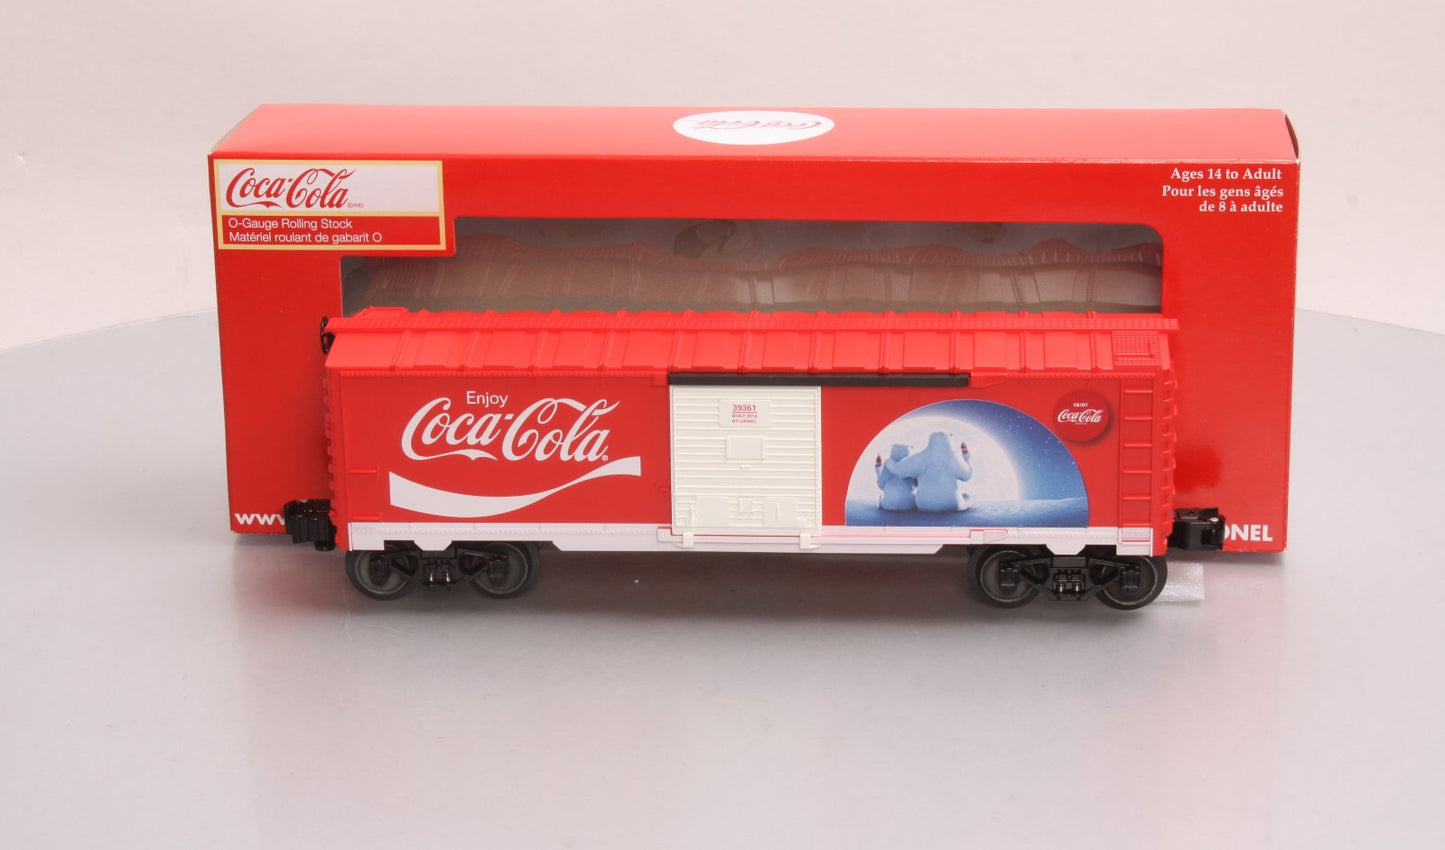 Lionel 6-39361 Coca-Cola Polar Bear Boxcar